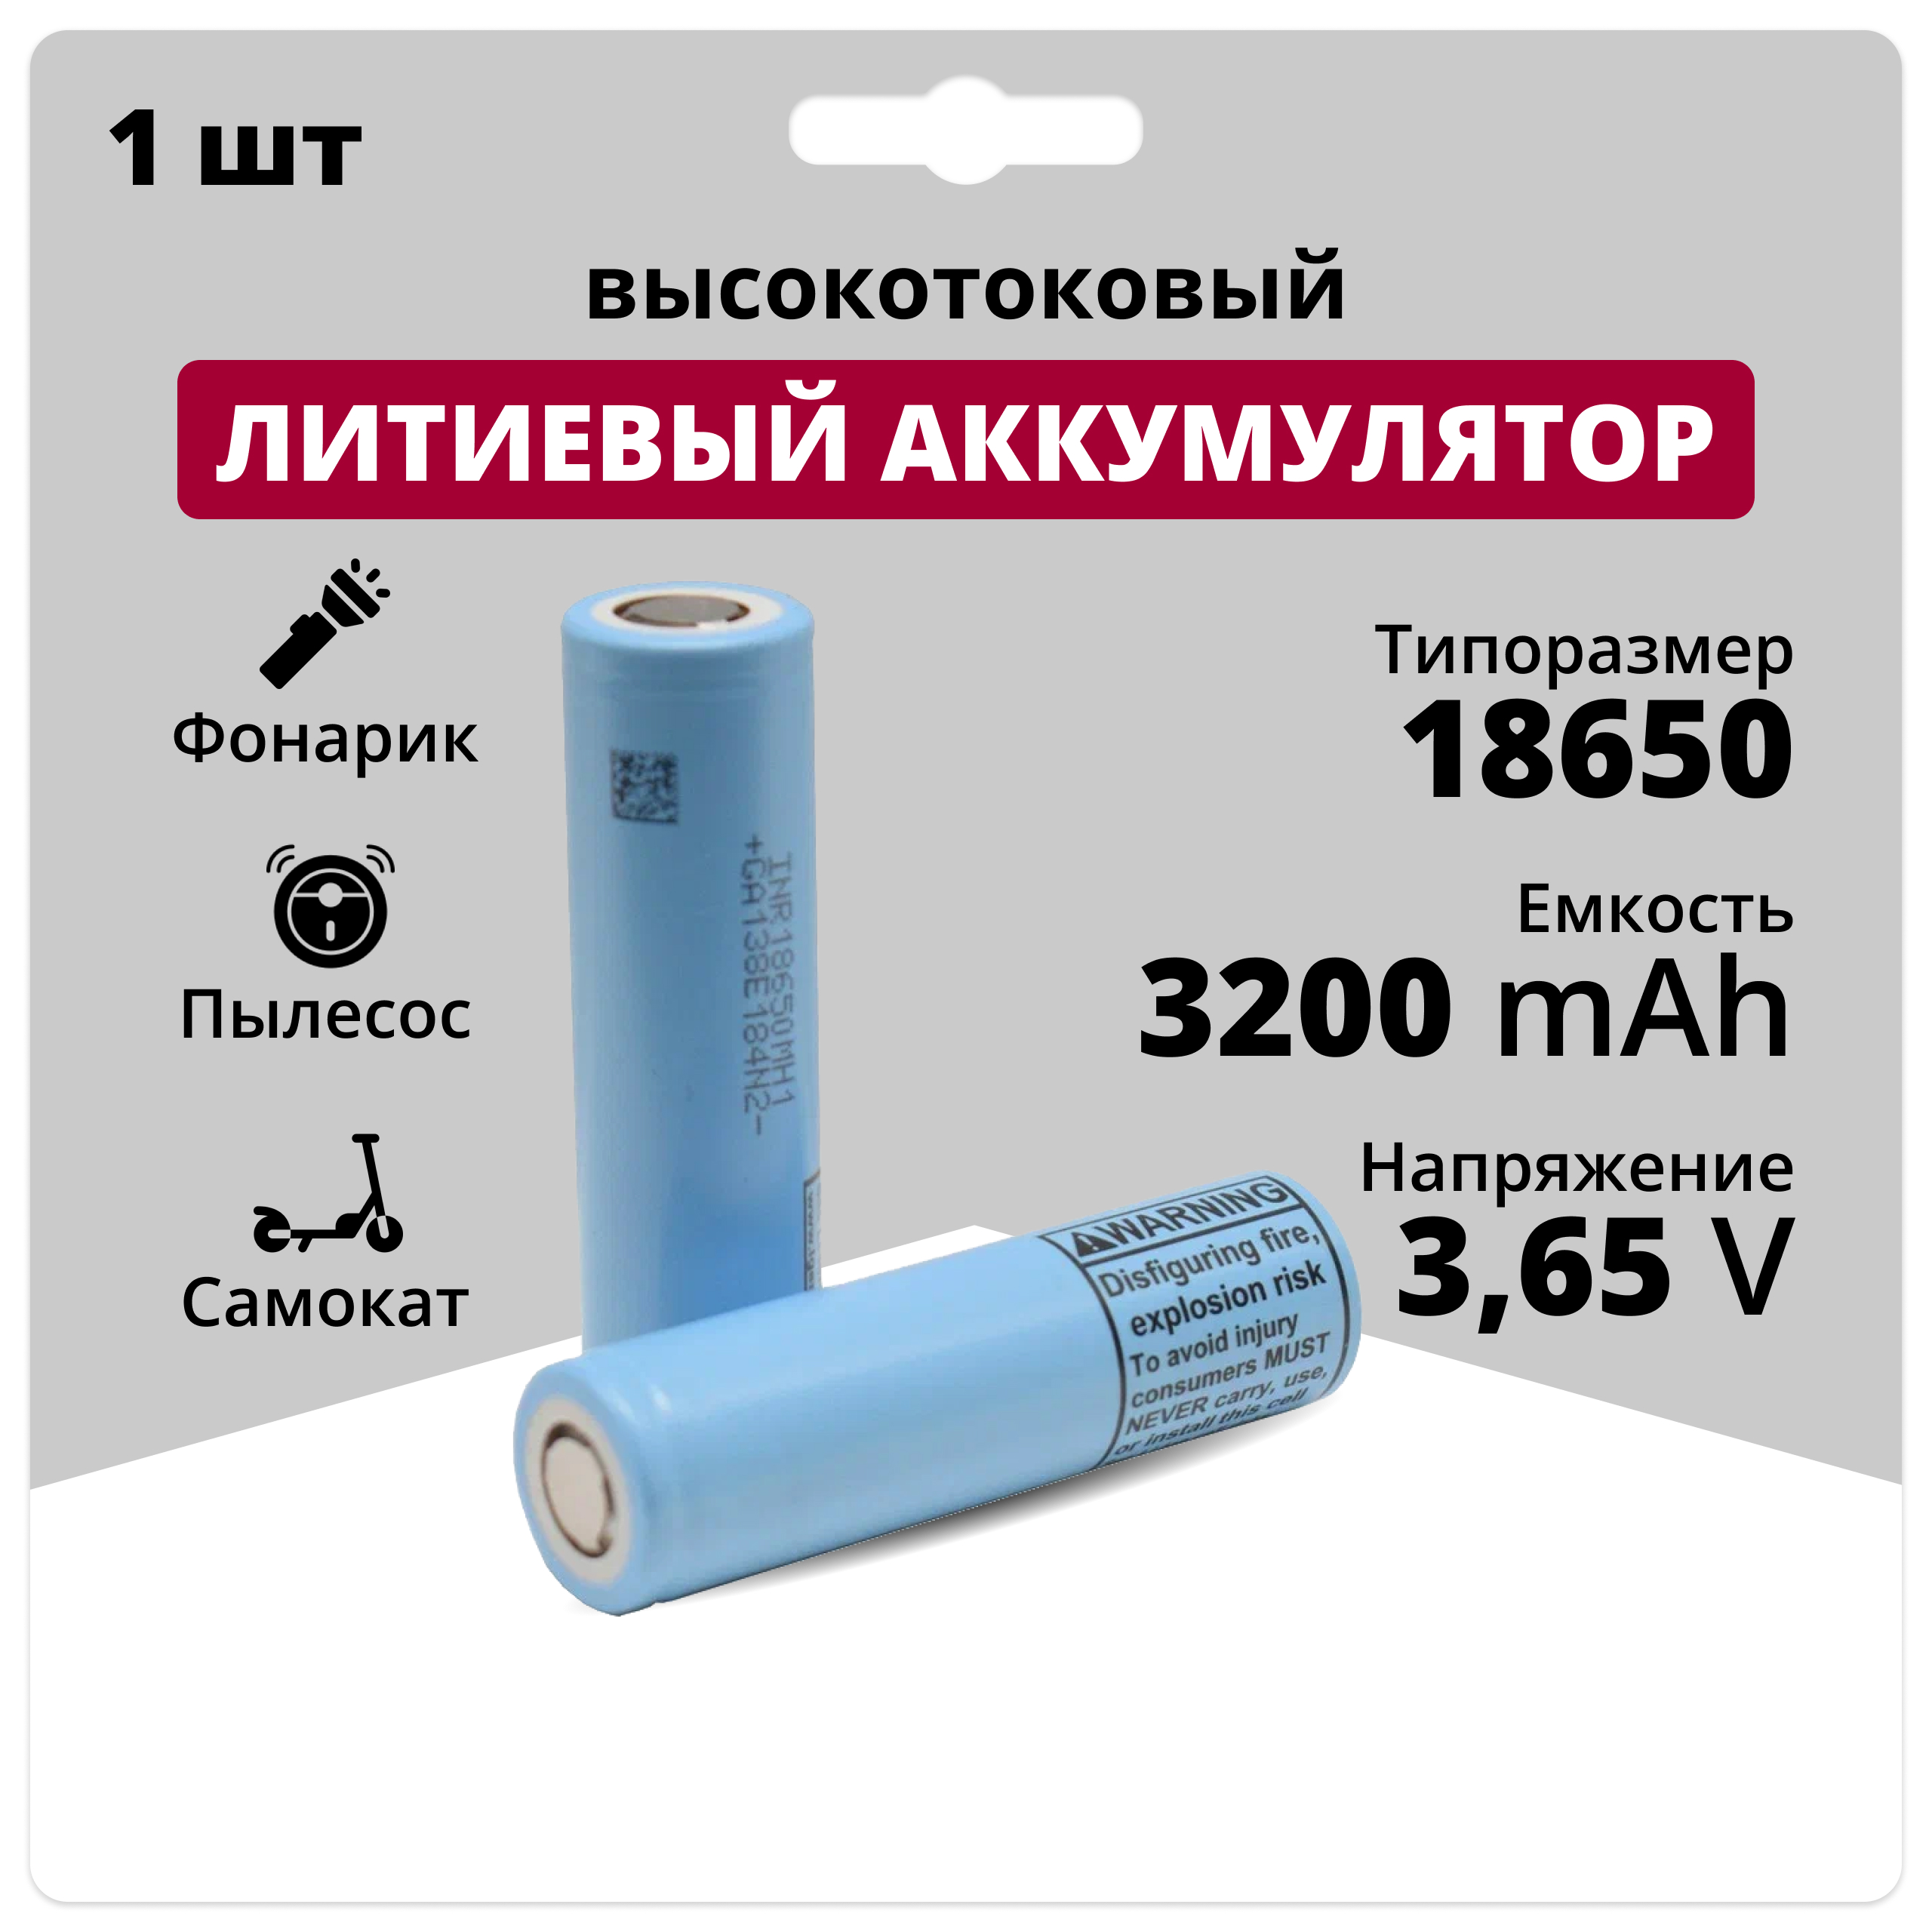 aa аккумуляторная батарейка gp 130aahc 2 шт 1300мaч Аккумулятор 18650 LG 3,65 V, 3,2 Аh, 10 A, аккумуляторная батарейка Li-ion, 1 шт.